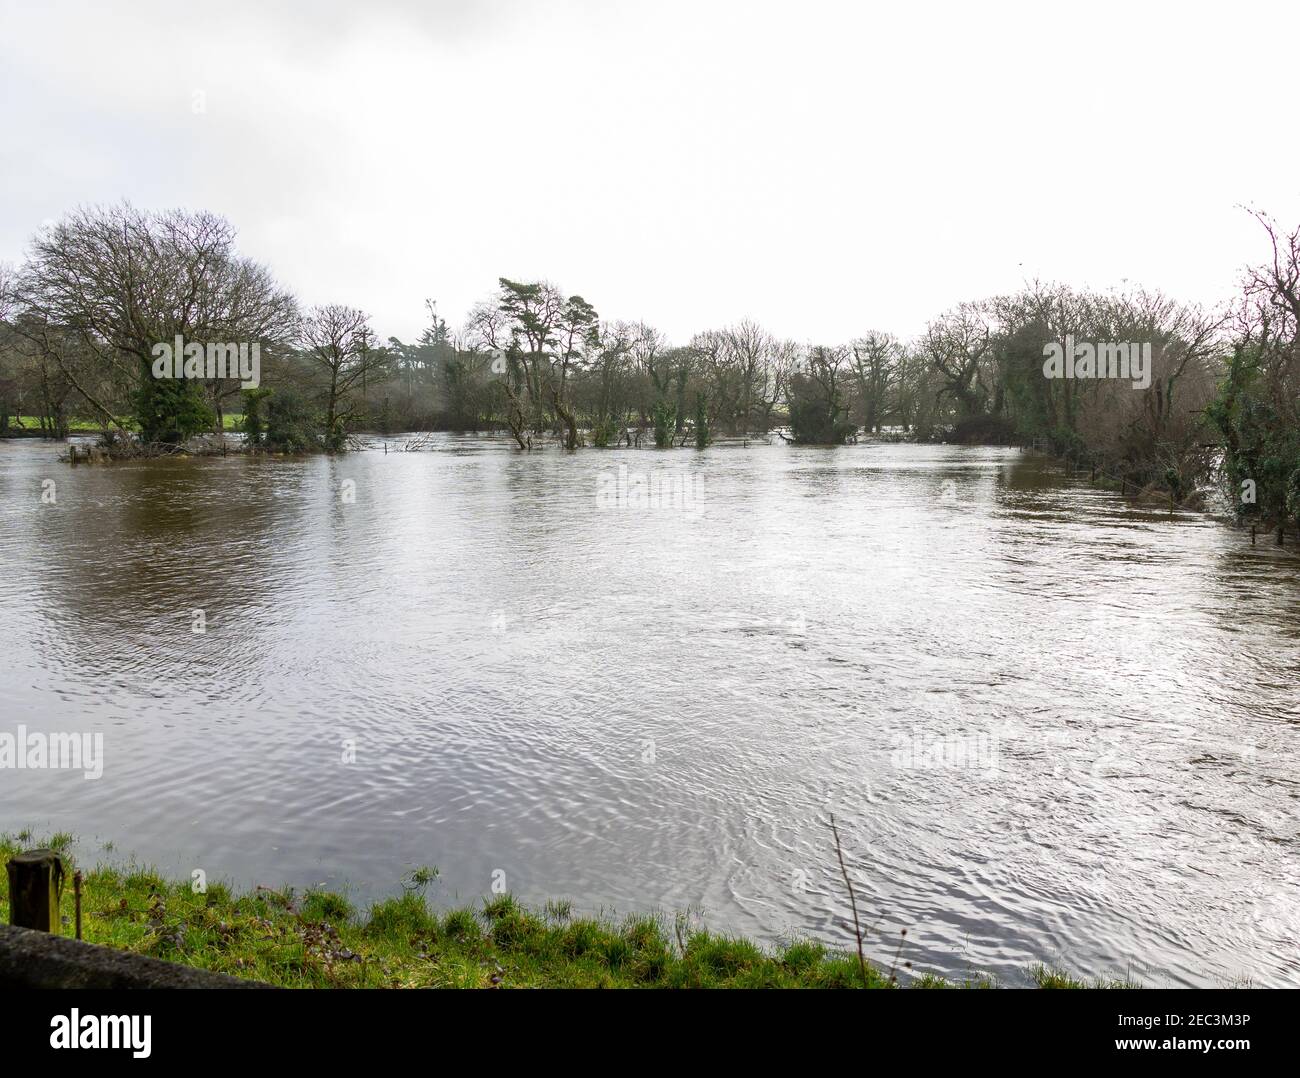 River Ilen Ireland flooding farmers fields after bursting its banks. Stock Photo